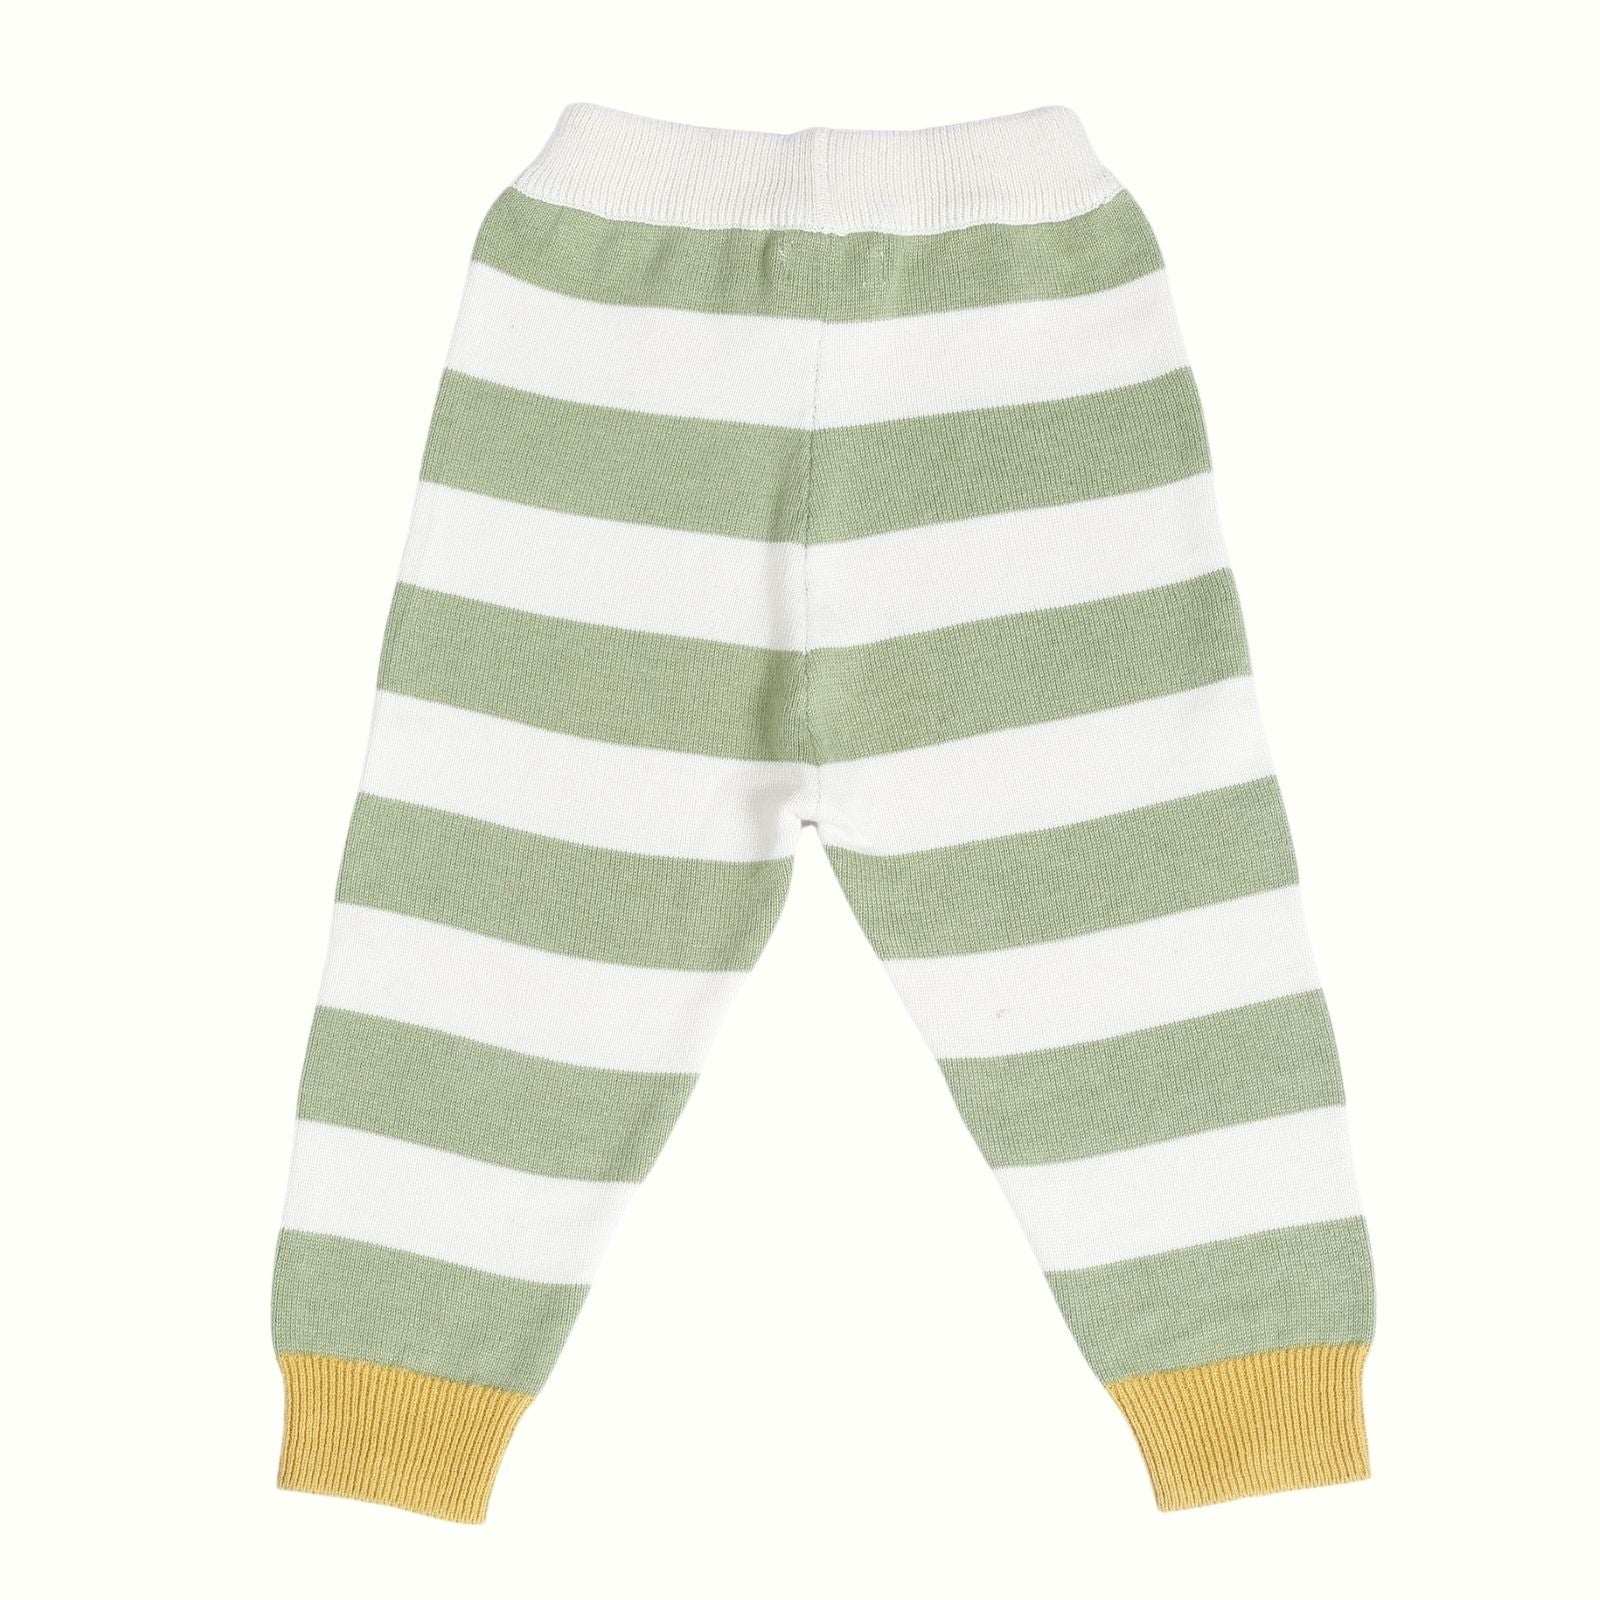 Greendeer Pistachio Stripe 100% Cotton Lower - Pistachio Green